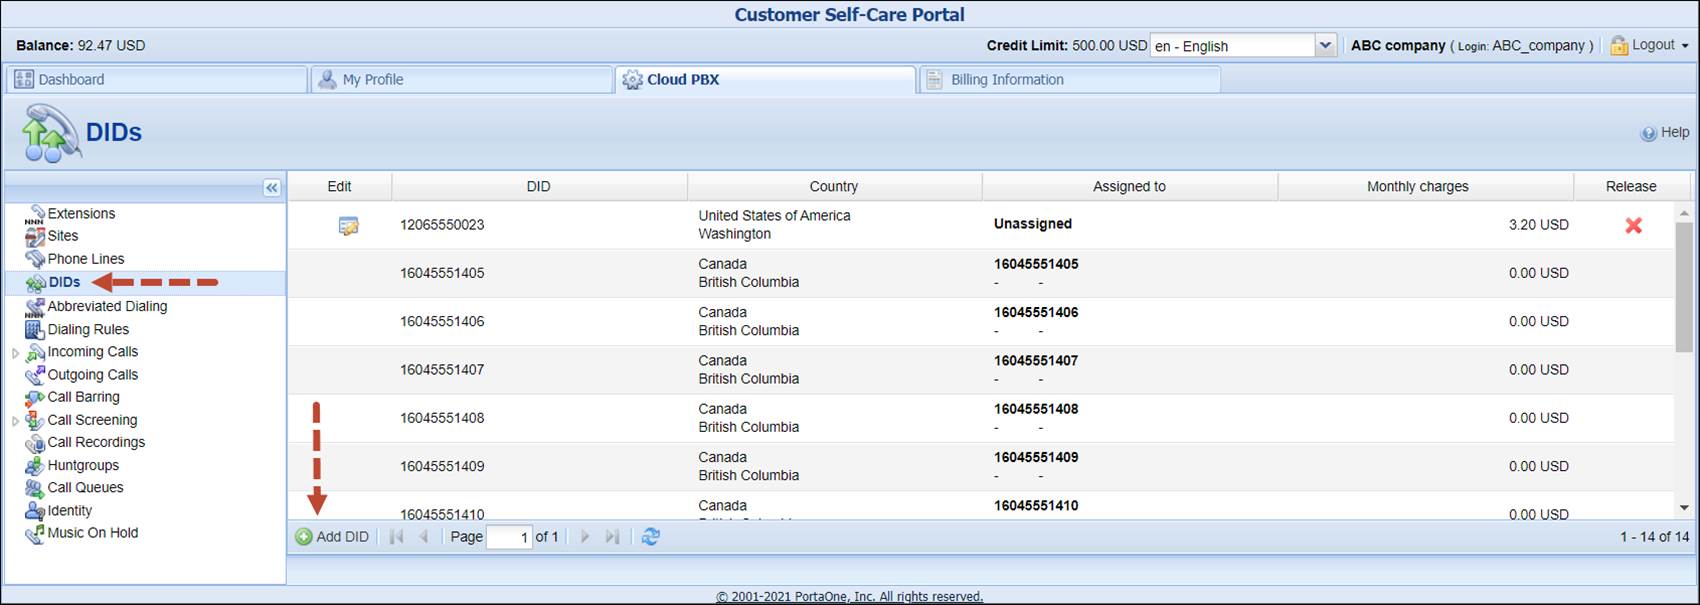 Add an alias on customer self-care interface